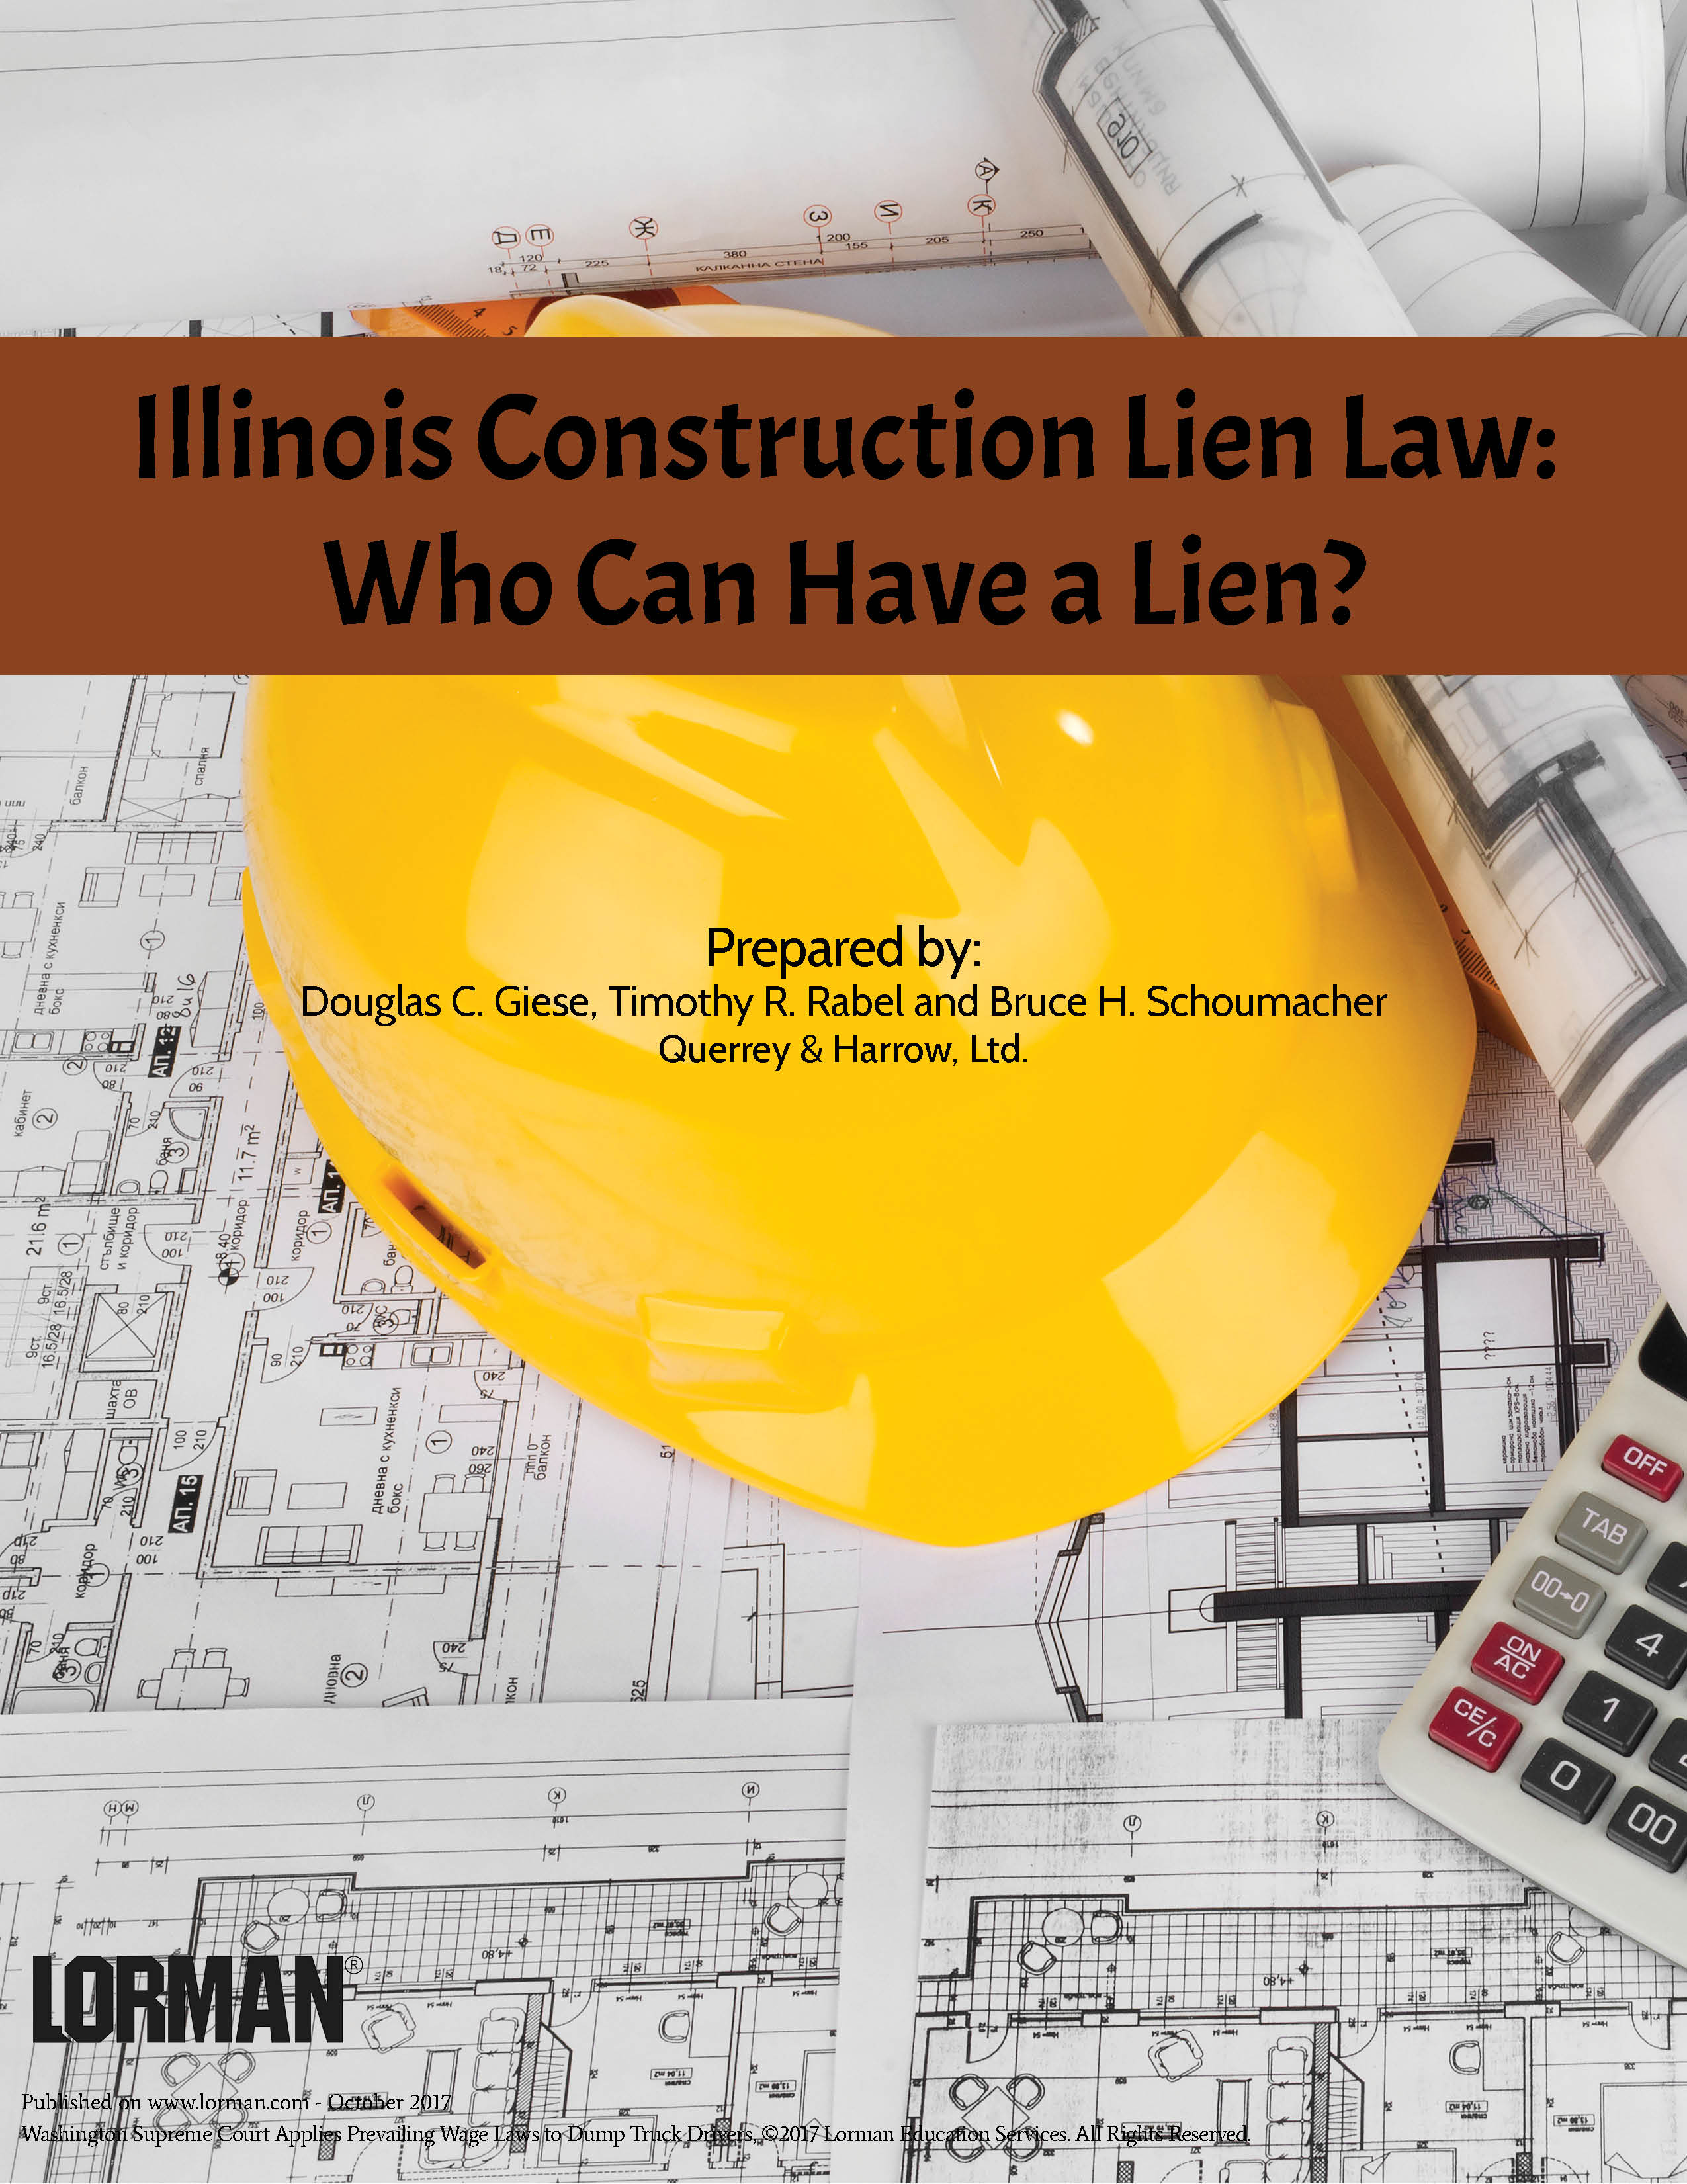 Illinois Construction Lien Law: Who Can Have a Lien?